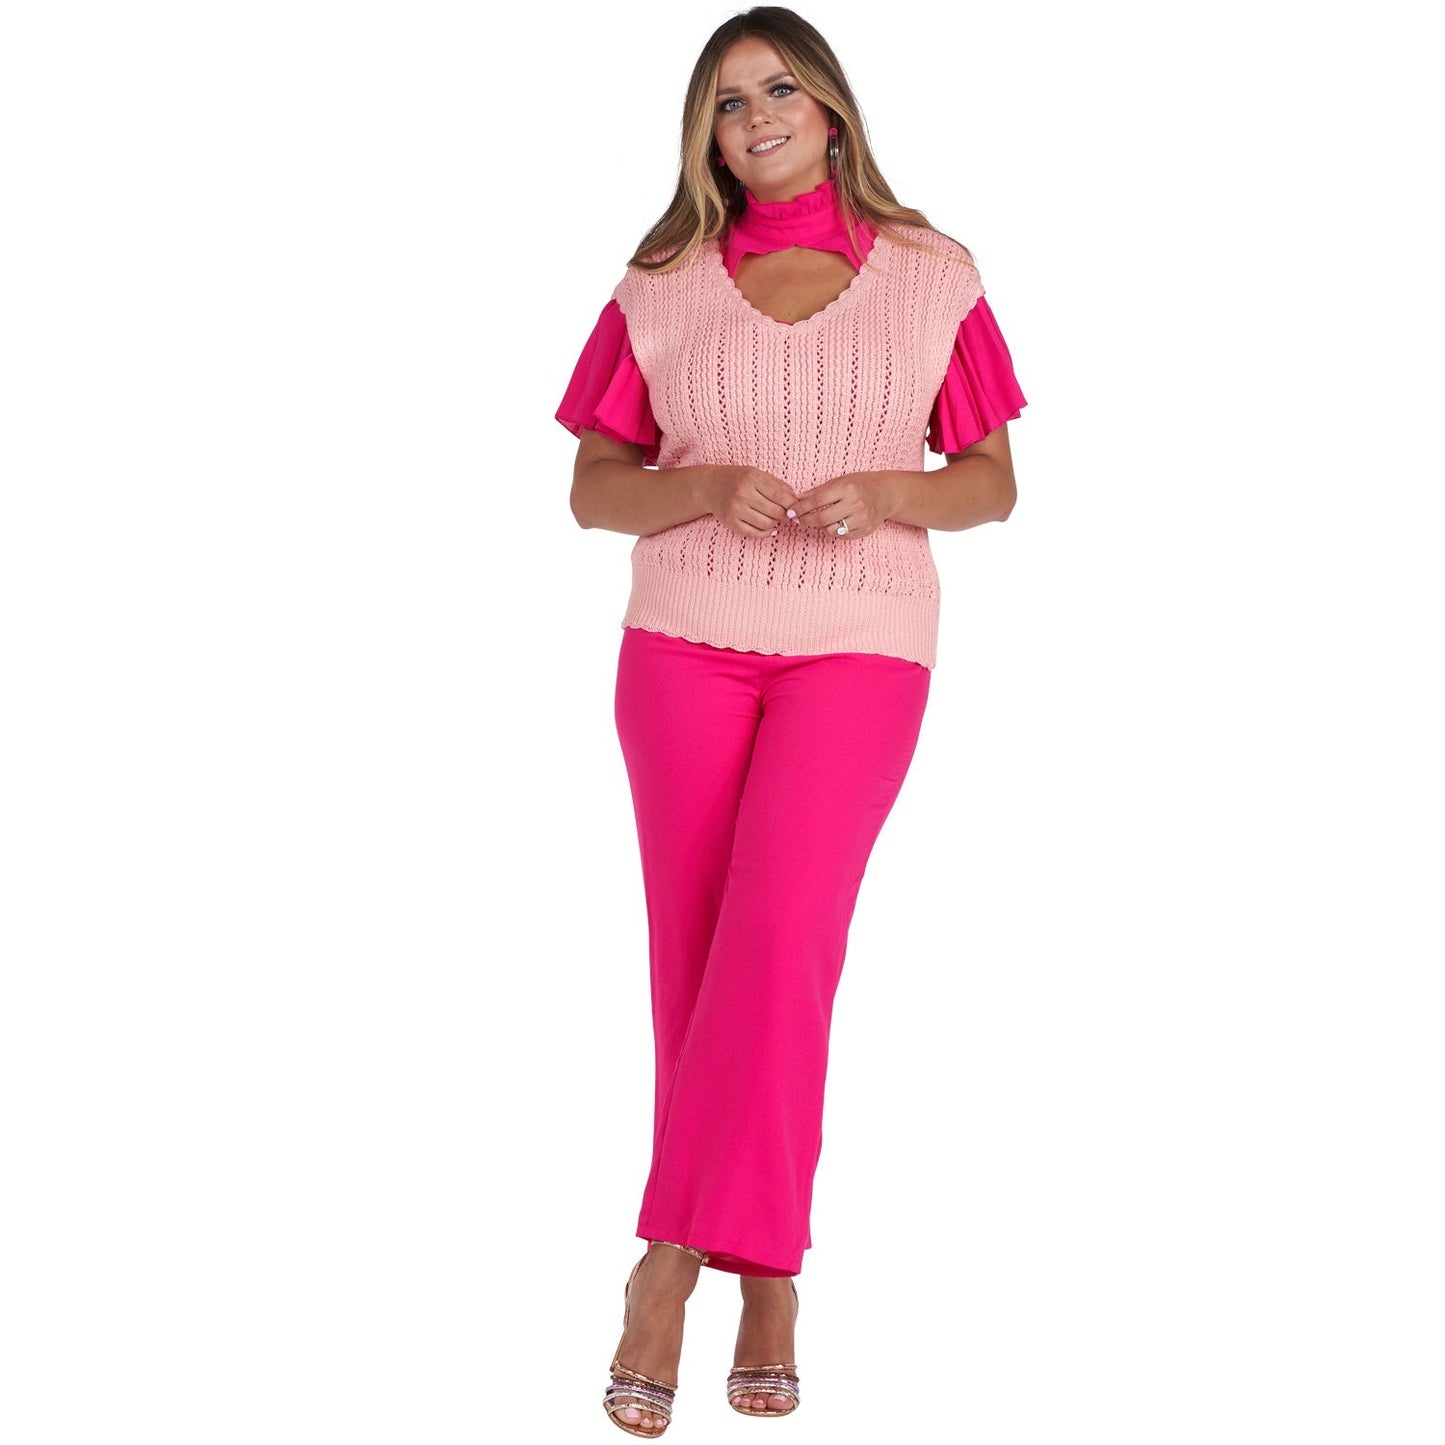 Scalloped Edge Sleeveless Sweater - Pink - Final Sale